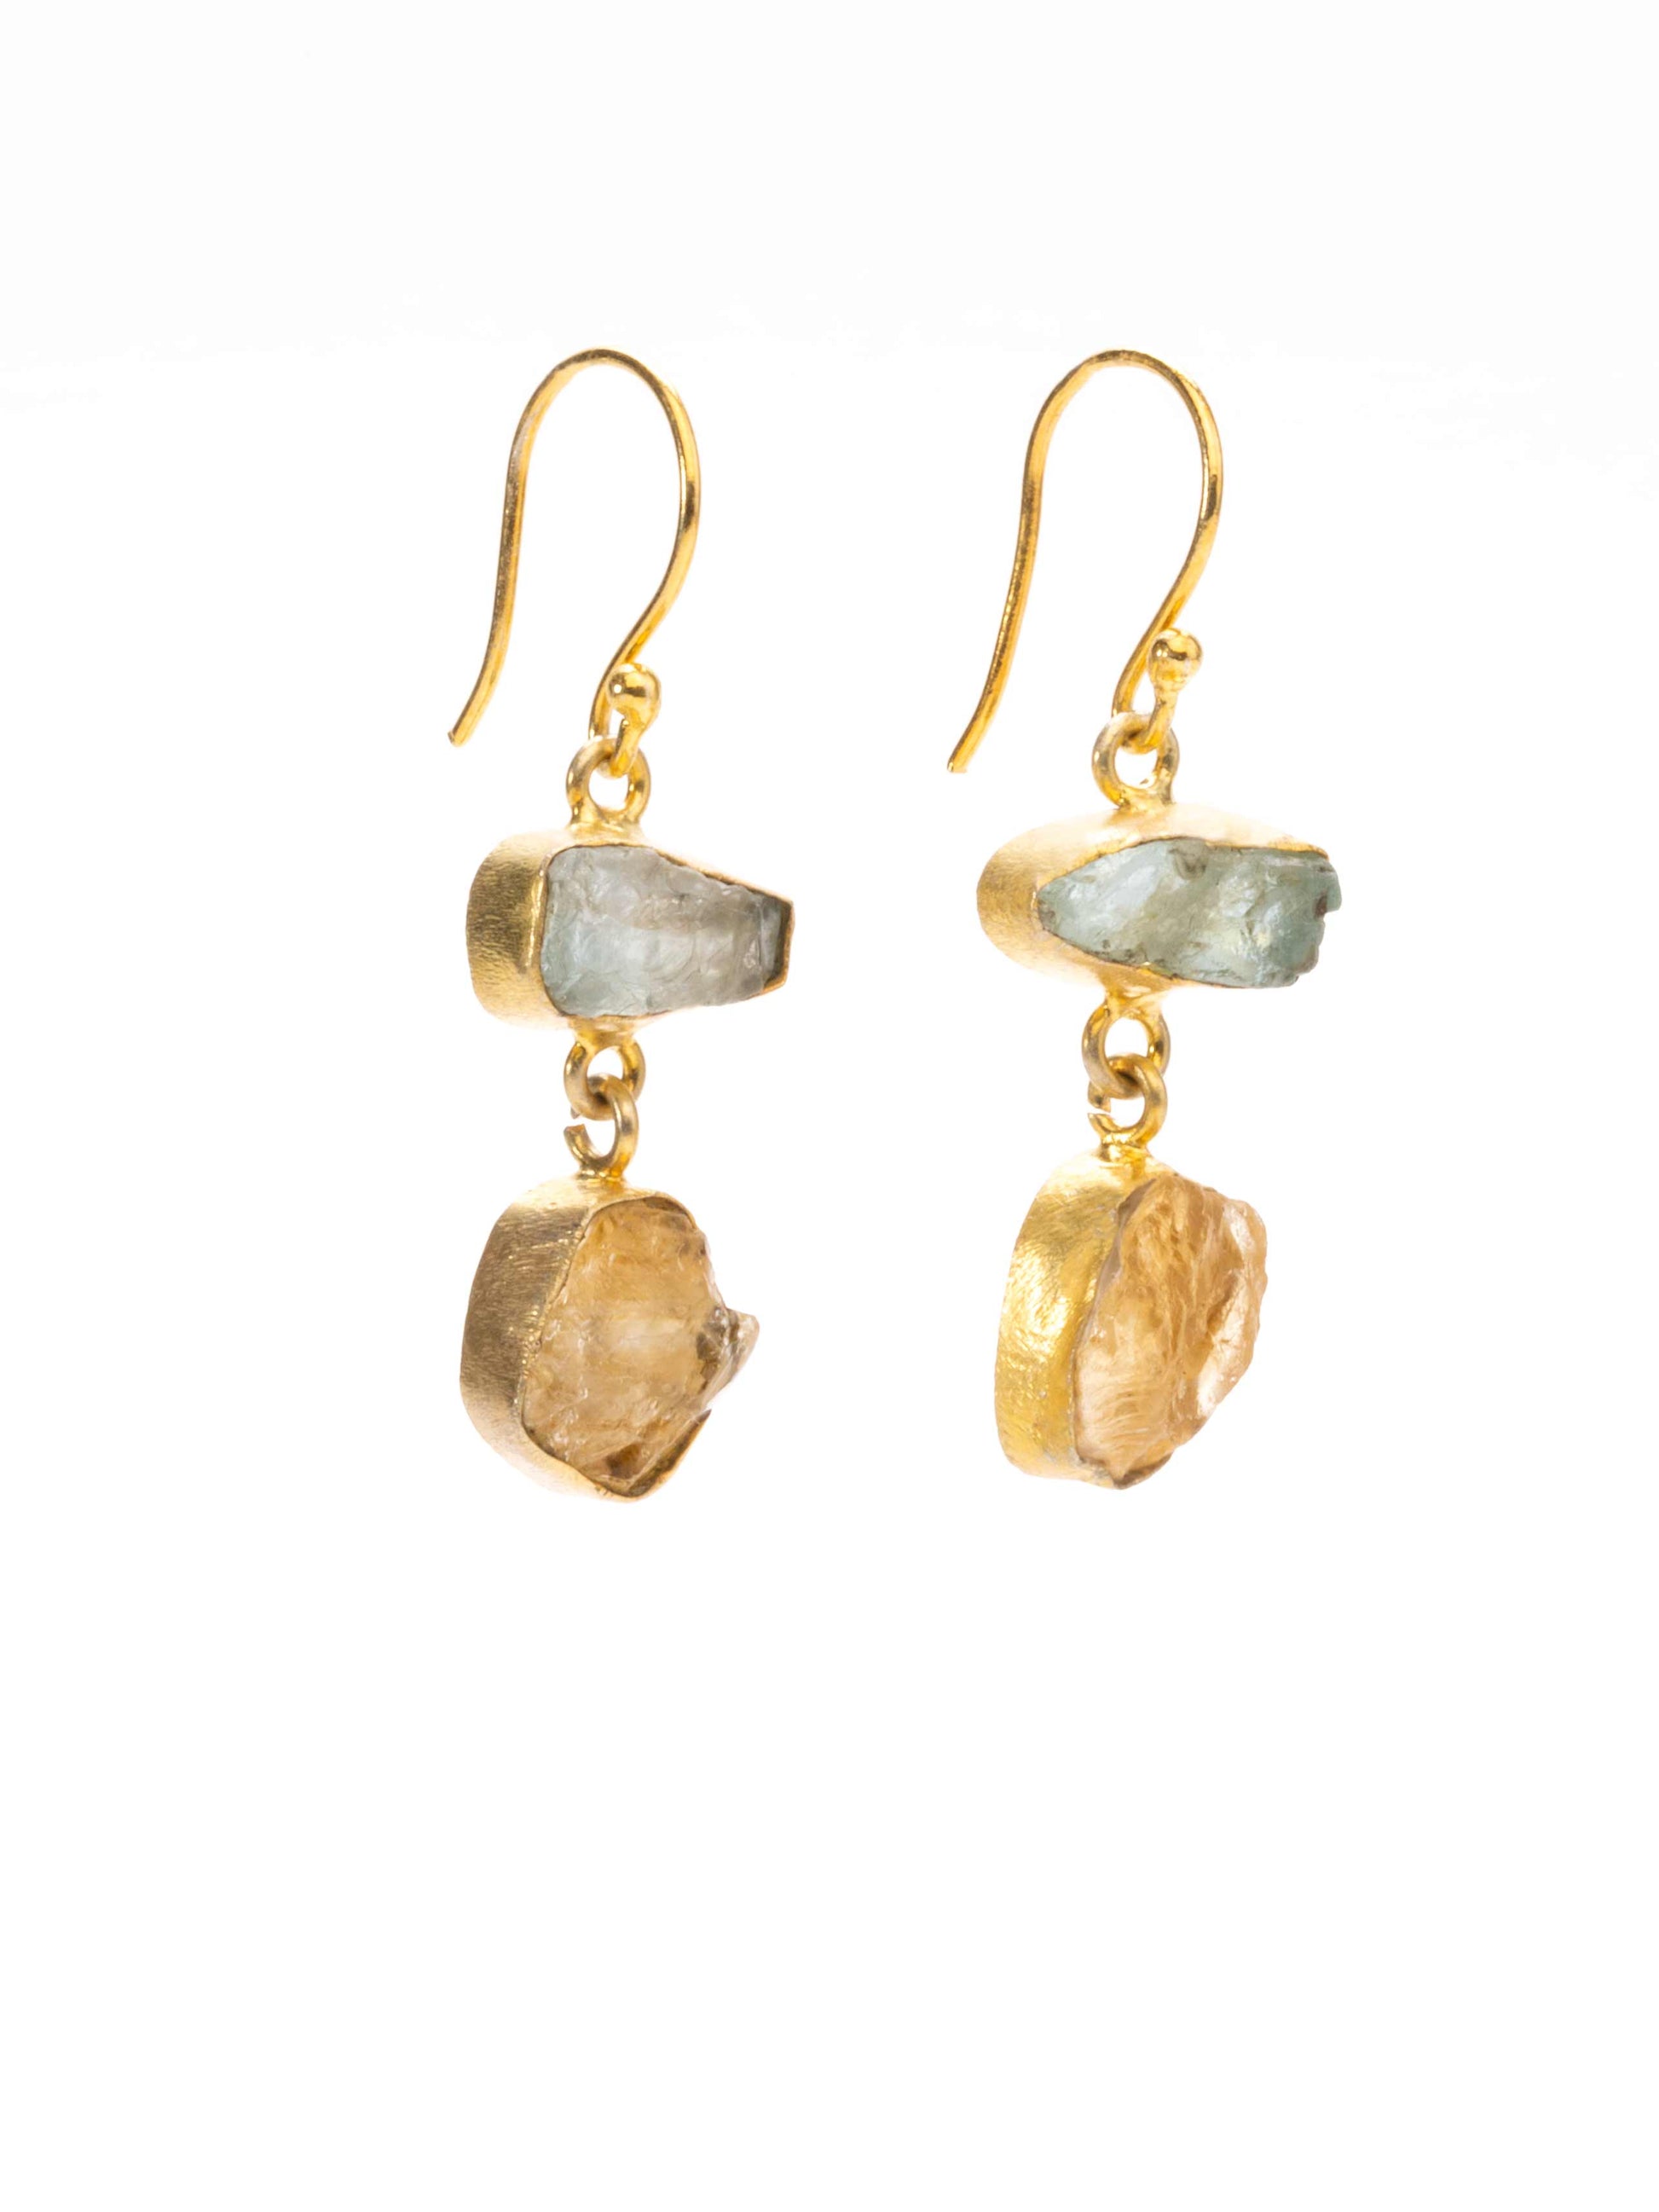 Raw cut gold earrings with aqua marine and citrine